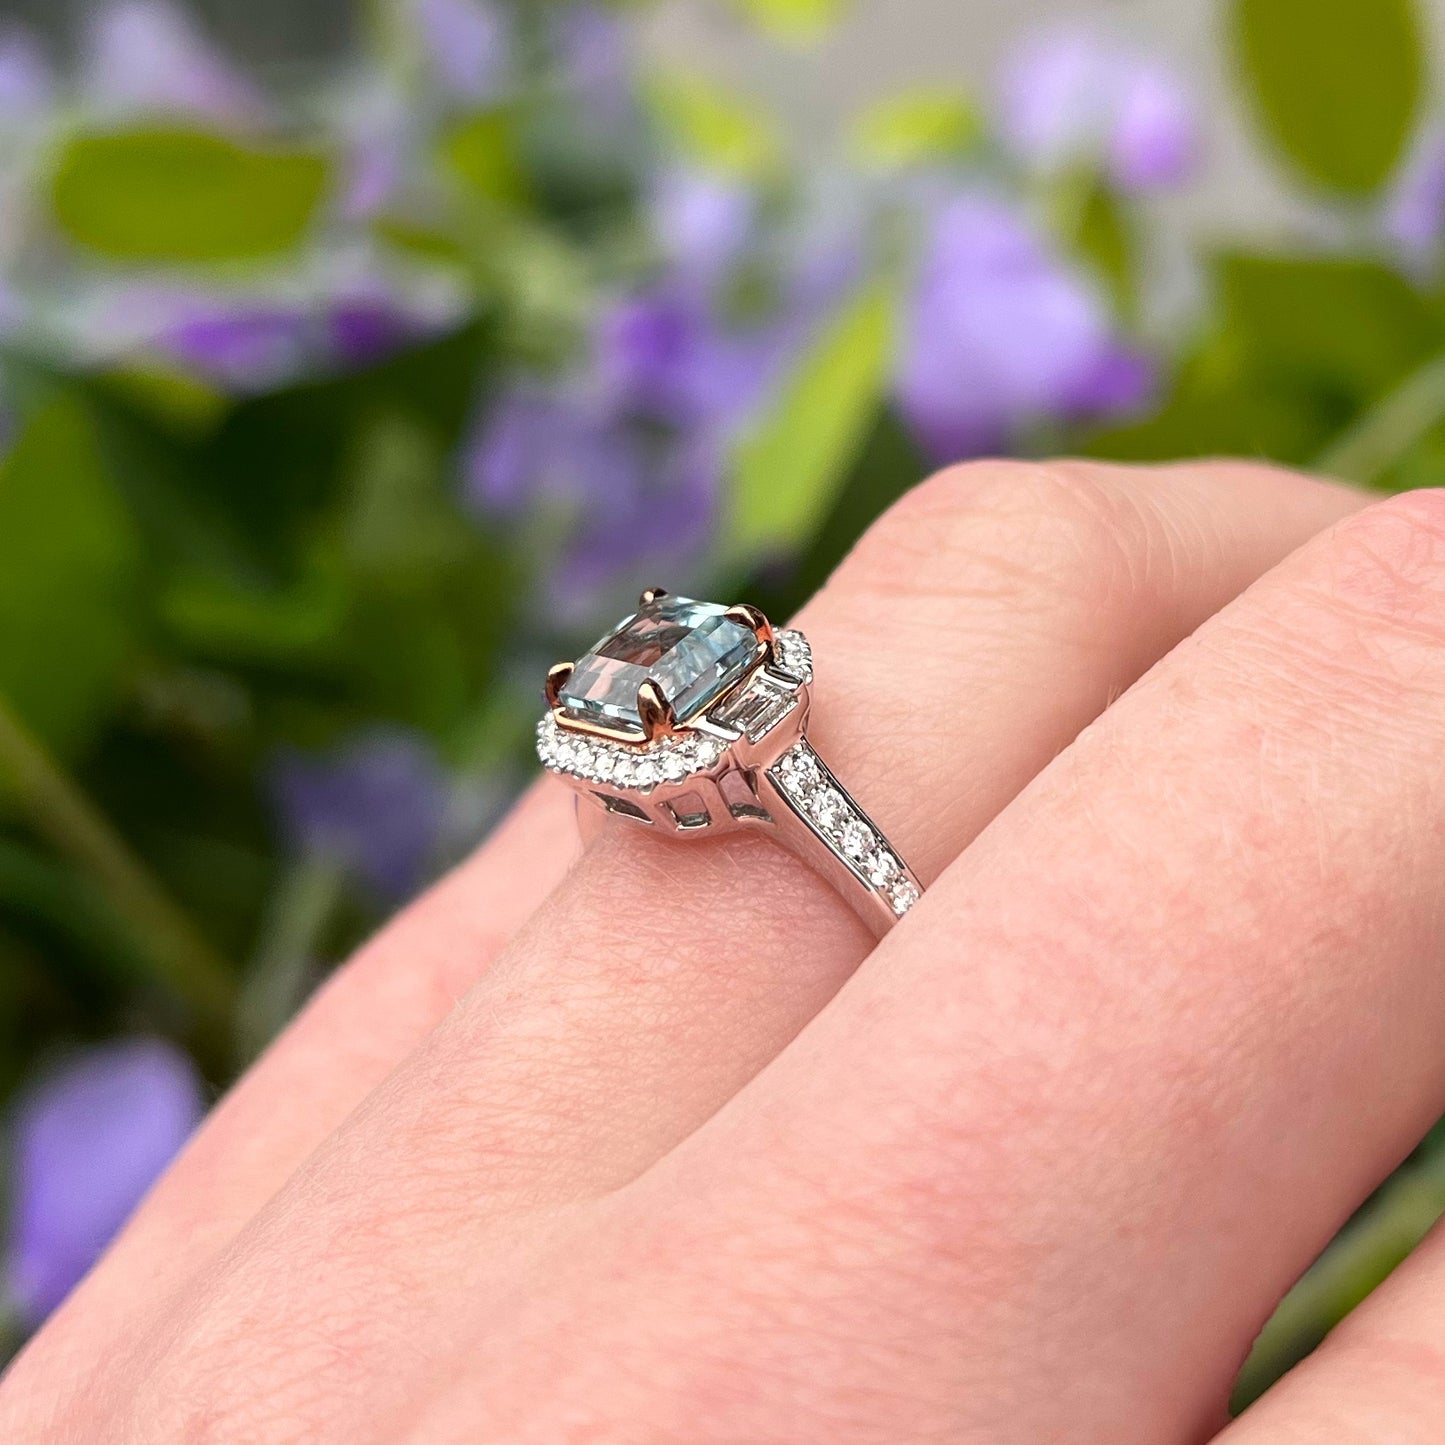 Beautiful 9ct White Gold Aquamarine and Diamond Ring - Size M 1/2